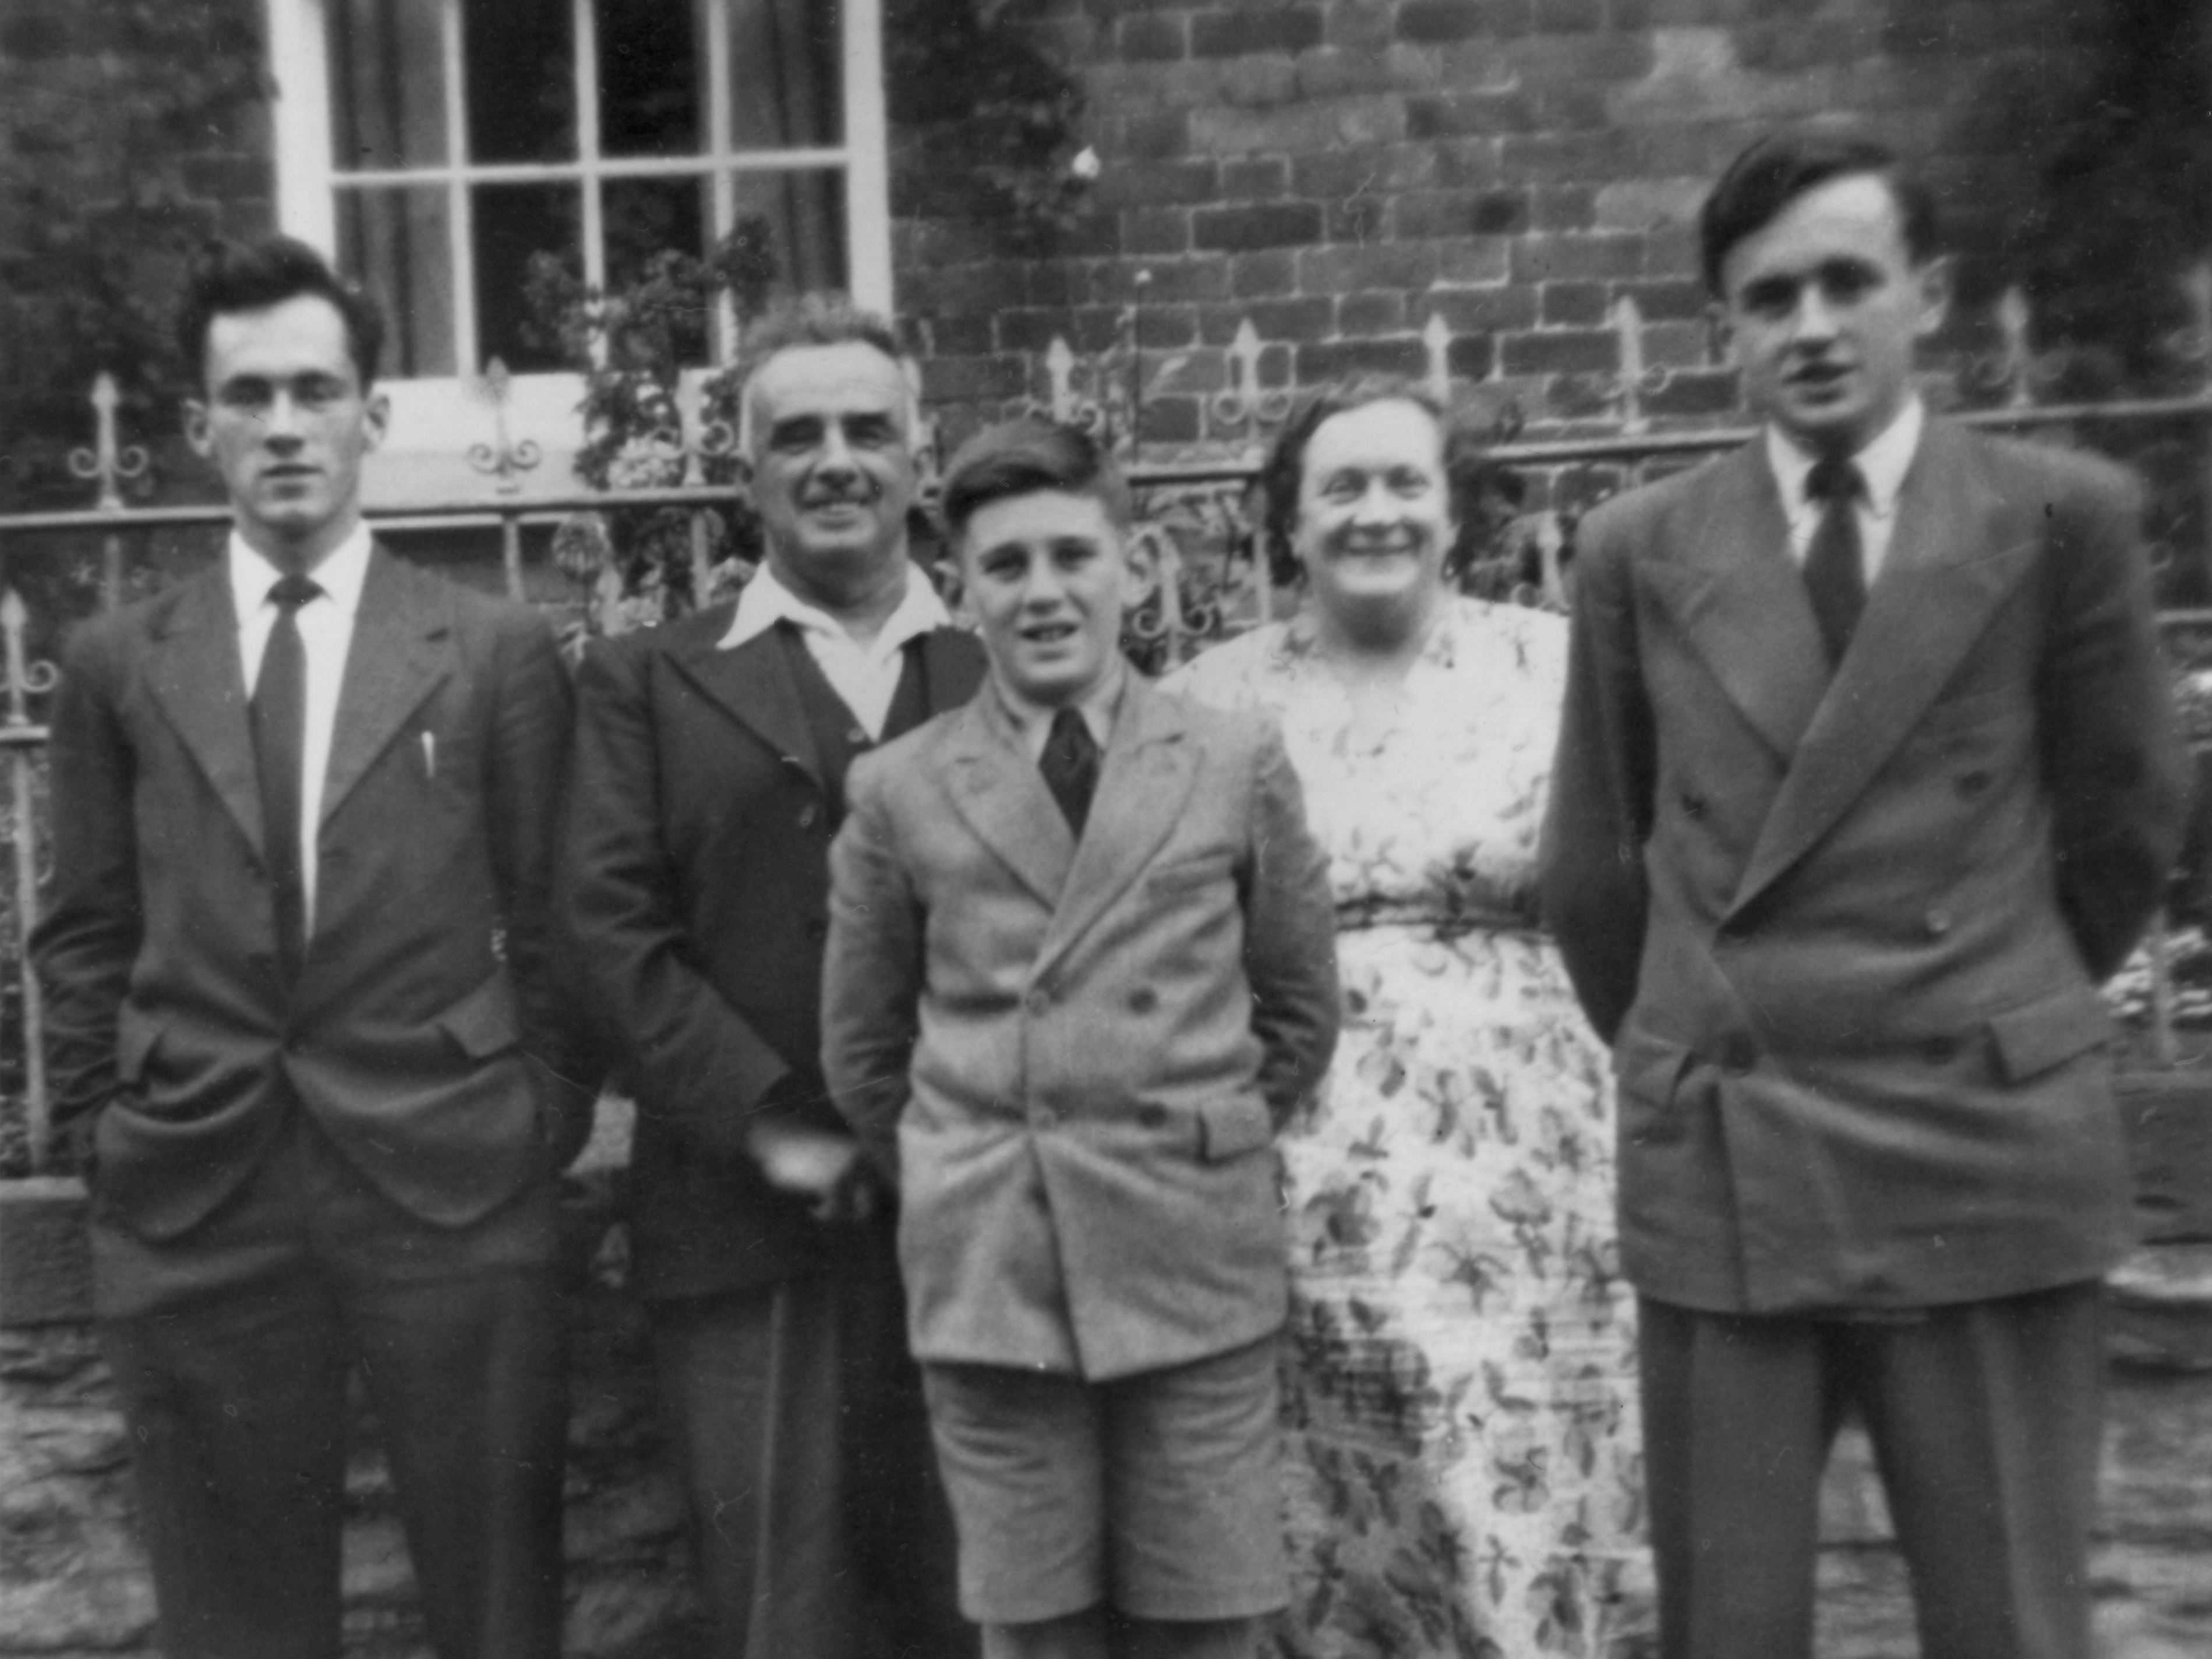 The Merediths, 1955. Richard, Dick, Peter, Eirys, Glyn.